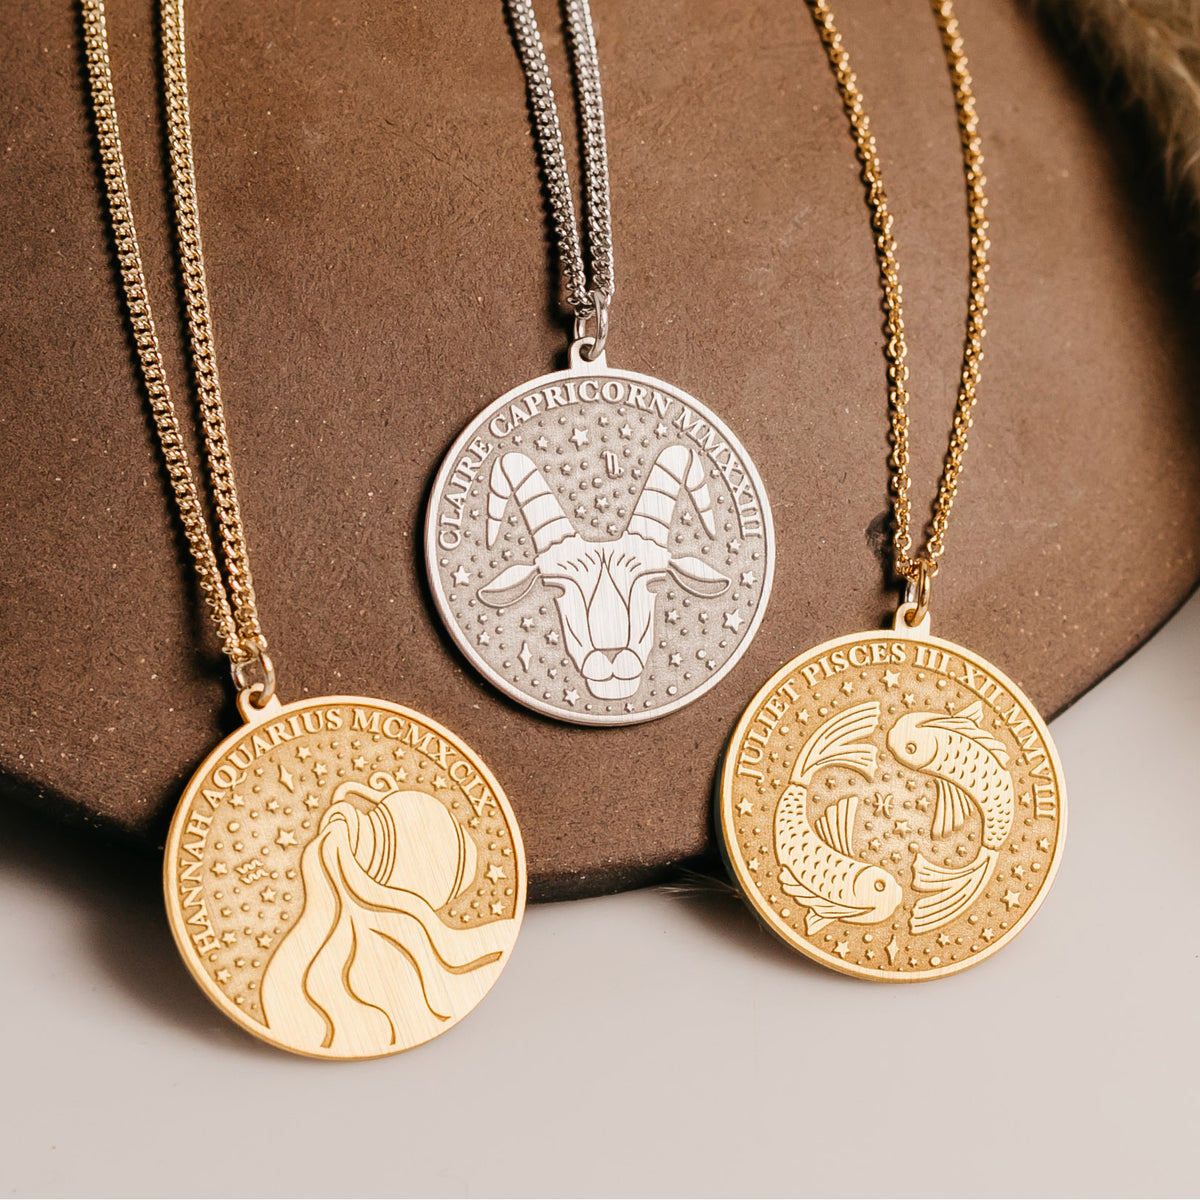 Aquarius Zodiac Medallion Necklace